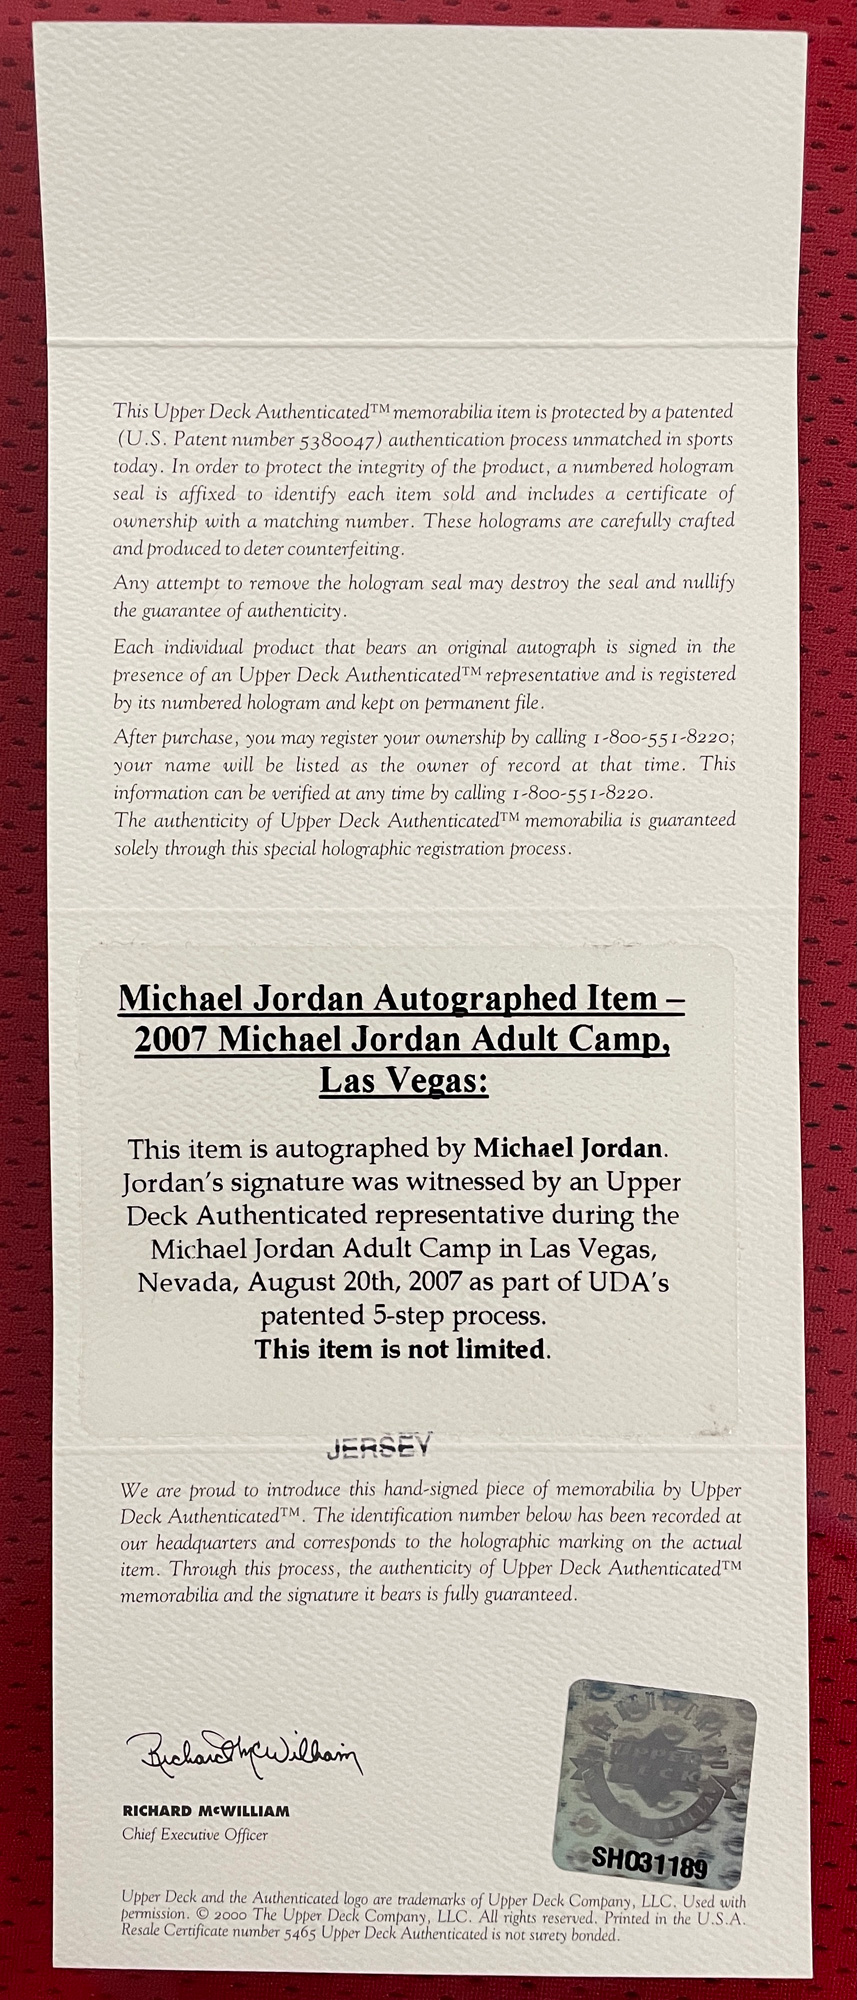 Michael Jordan Bulls 34x38 Custom Framed Jersey Display with